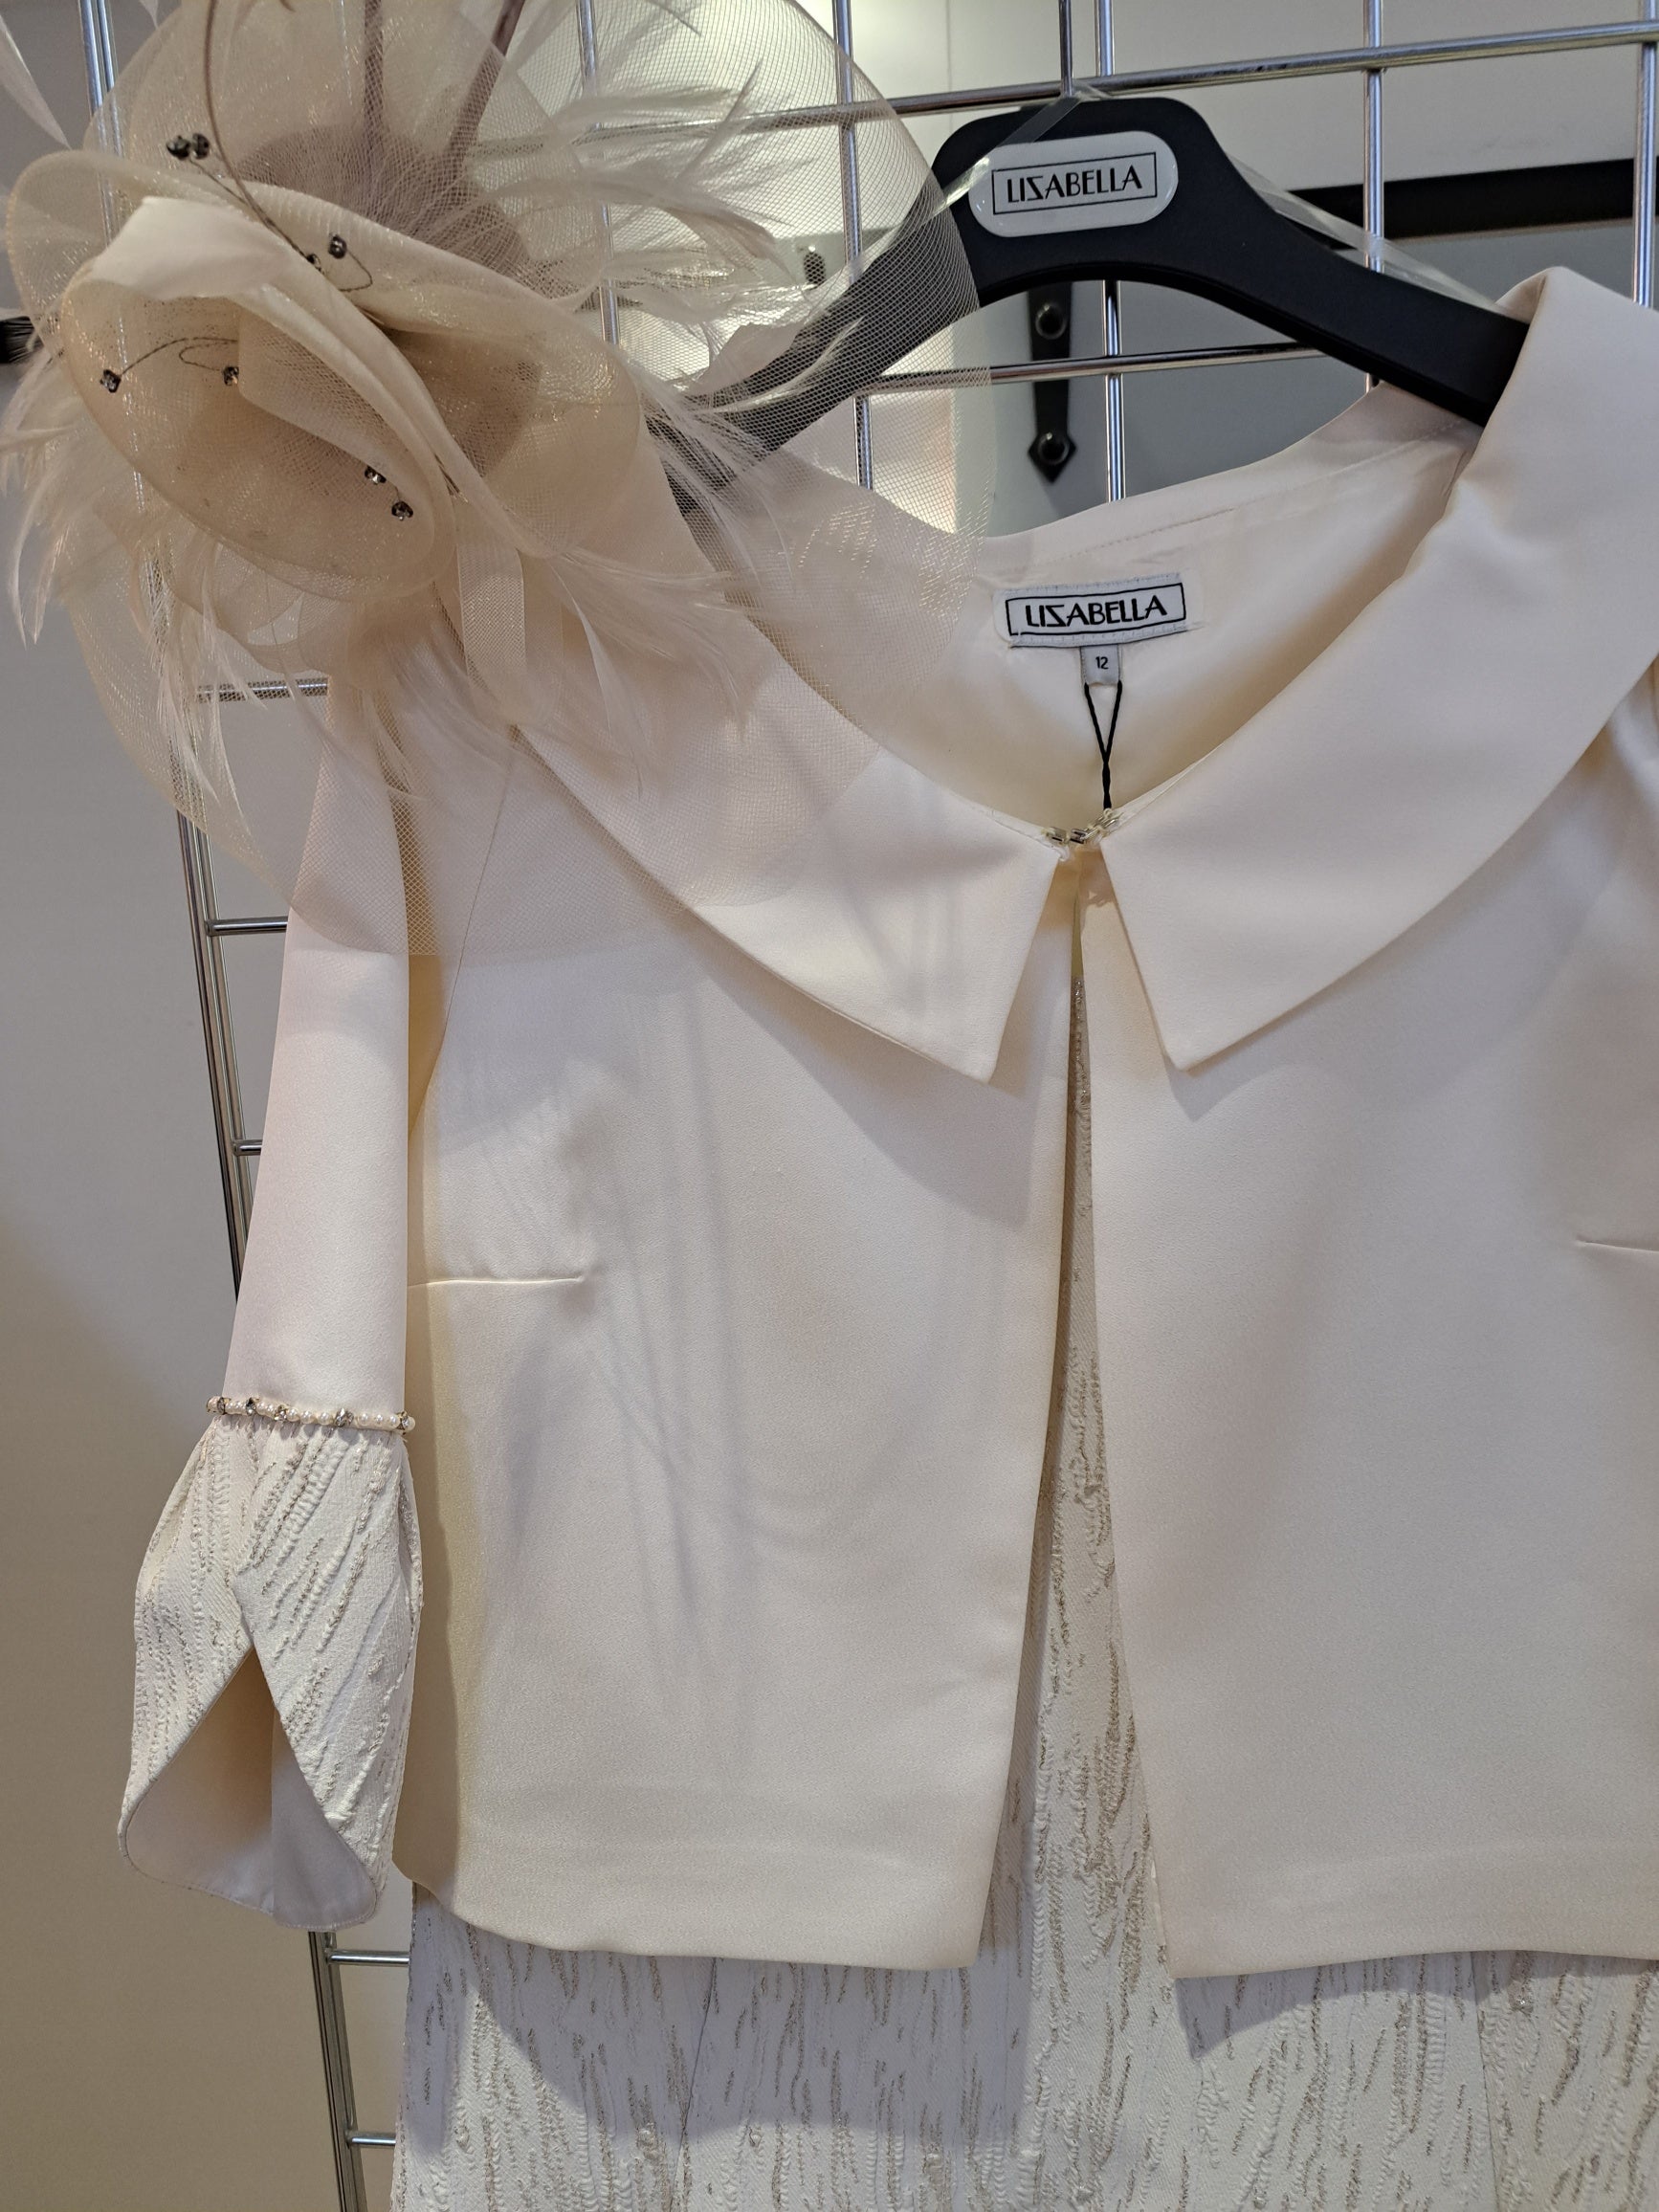 lizabella cream dress and jacket - Maya Maya Ltd